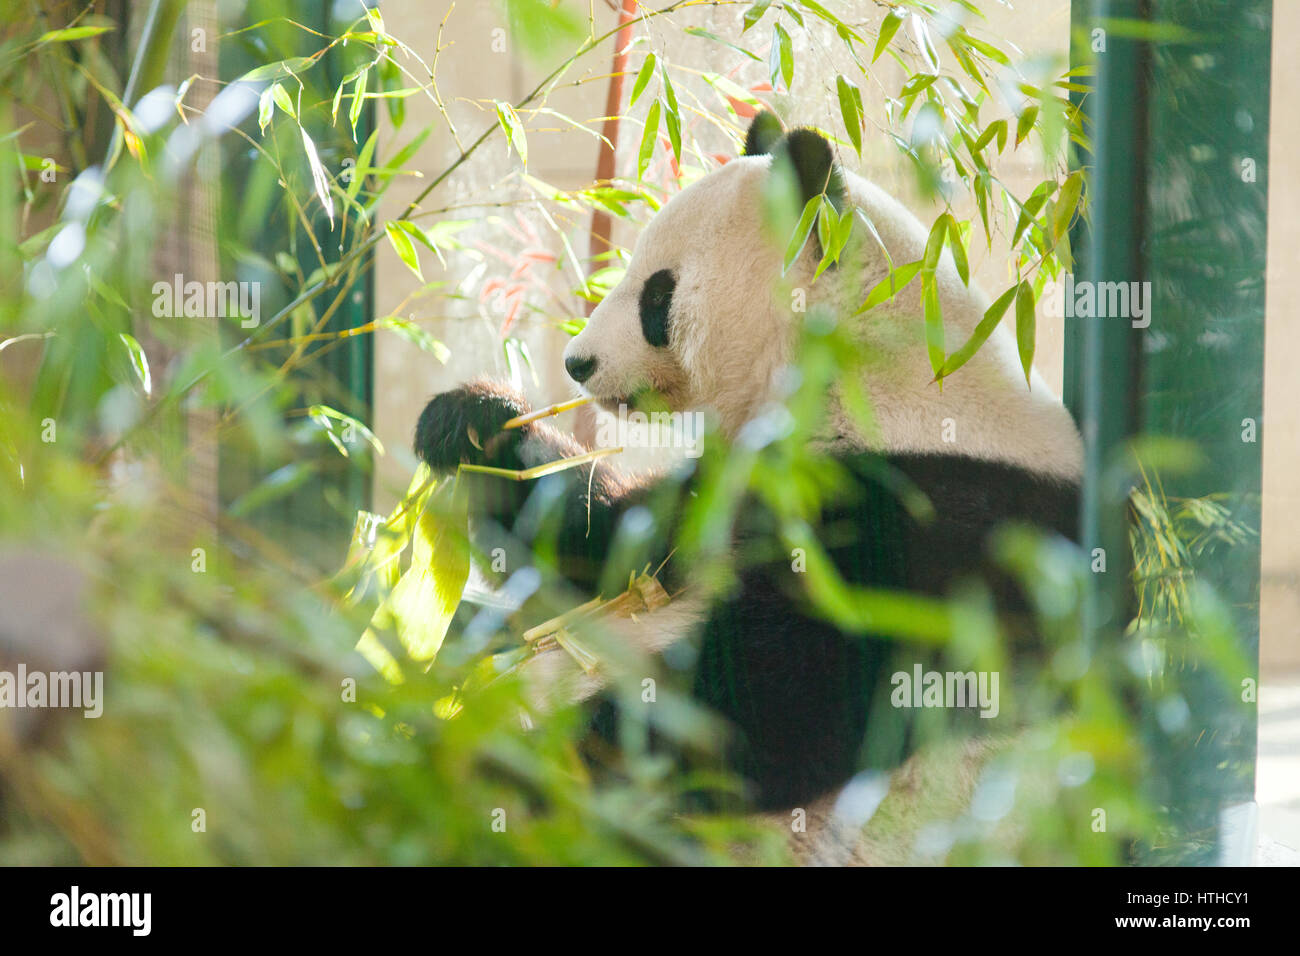 Giant panda (Ailuropoda melanoleuca) eating bamboo, Tiergarden, Schönbrunn Zoo in Vienna, Austria, Europe. Stock Photo